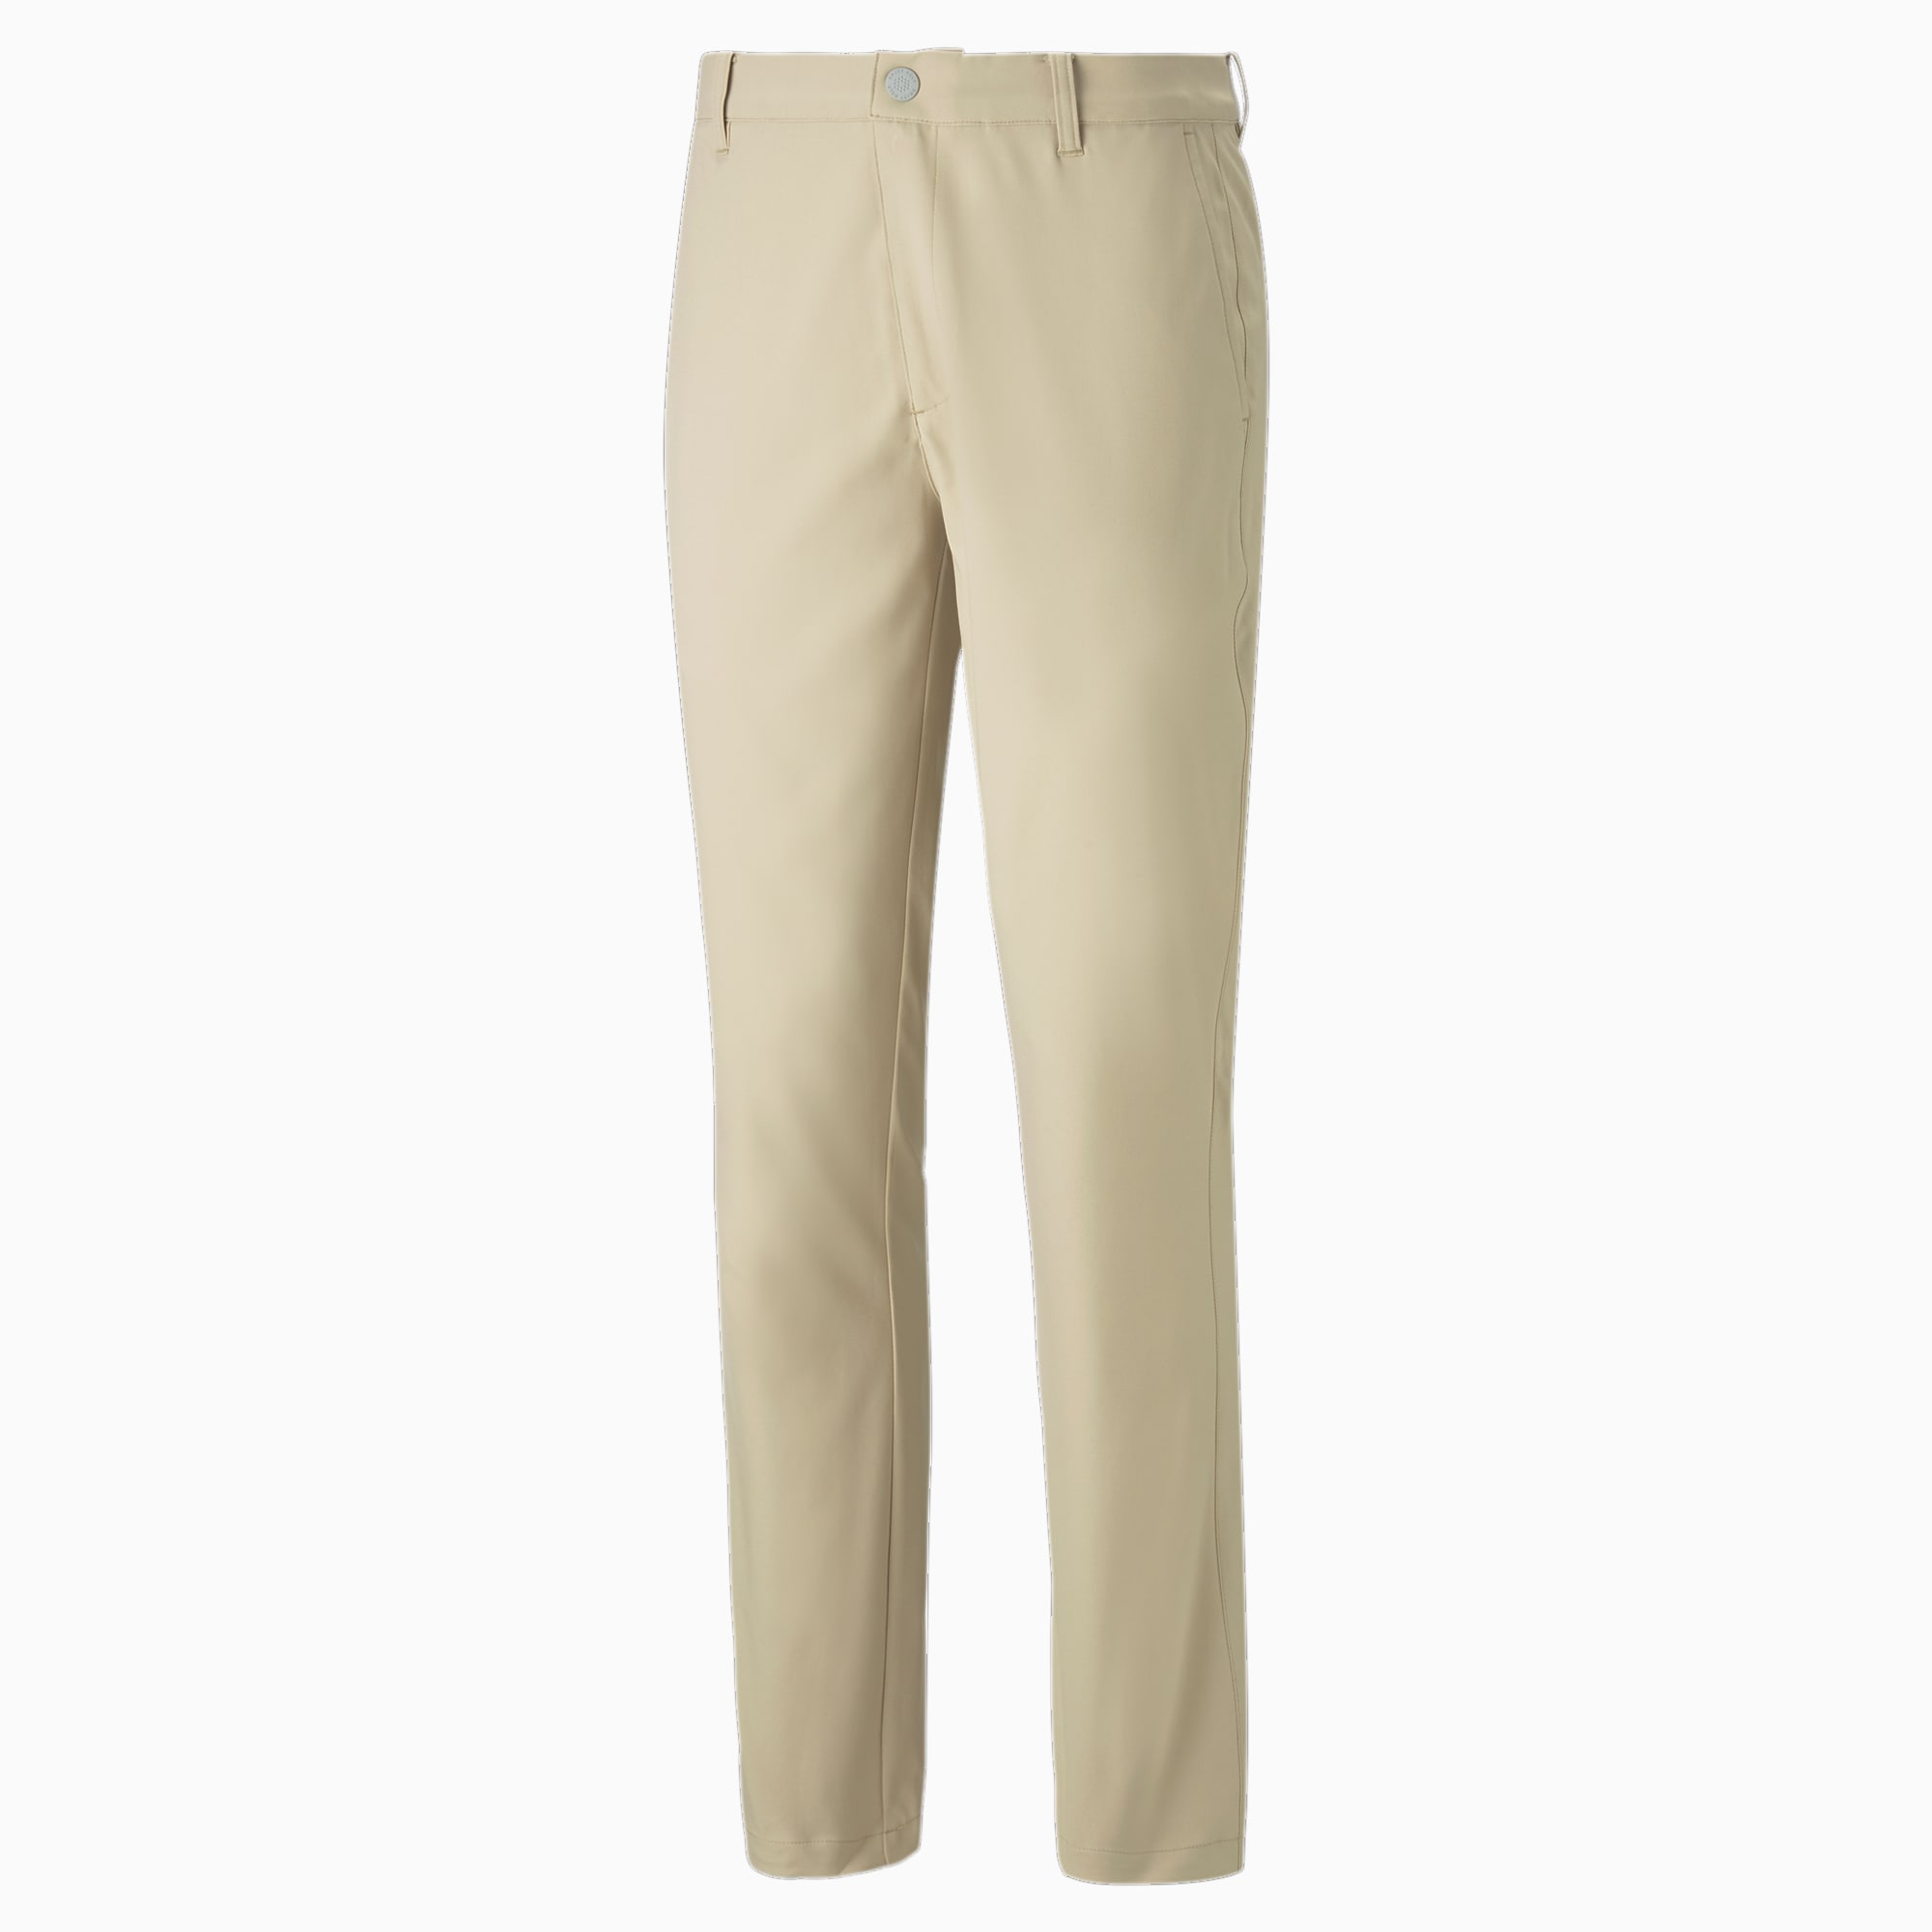 PUMA Dealer Tailored Golf Pants Men, Alabaster, Size 35/32, Clothing